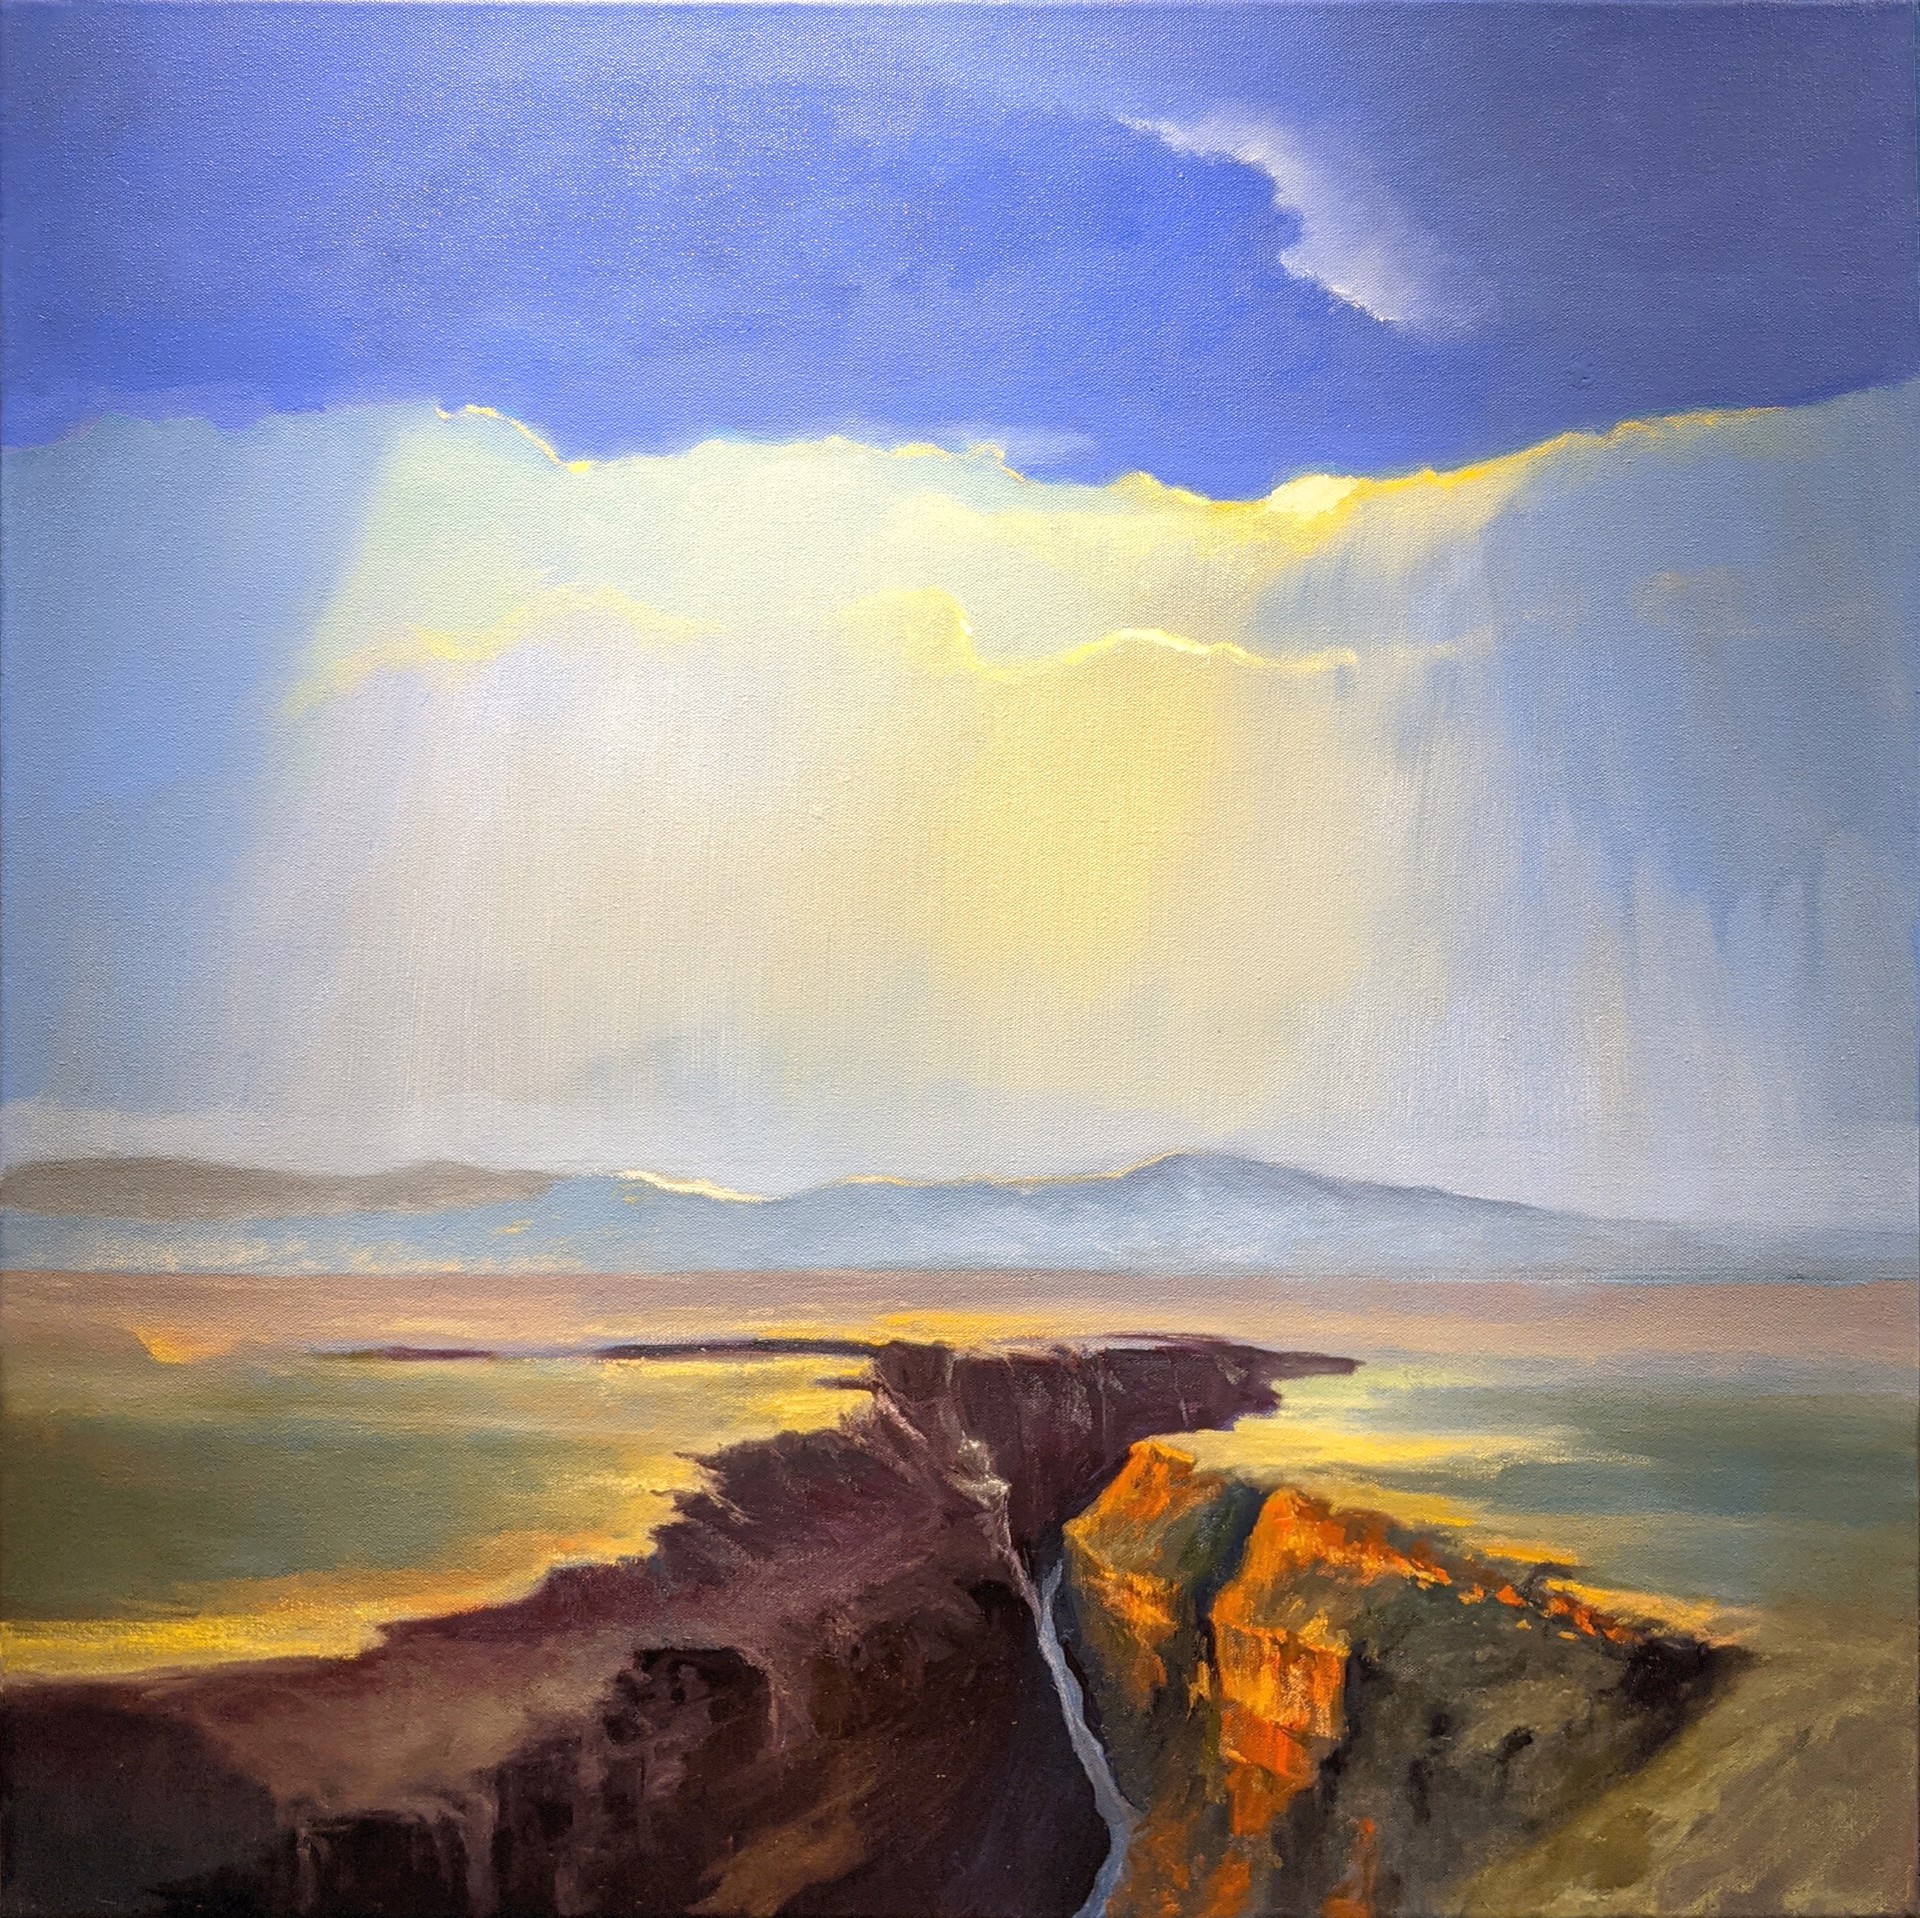 Desert Dream by Craig Freeman